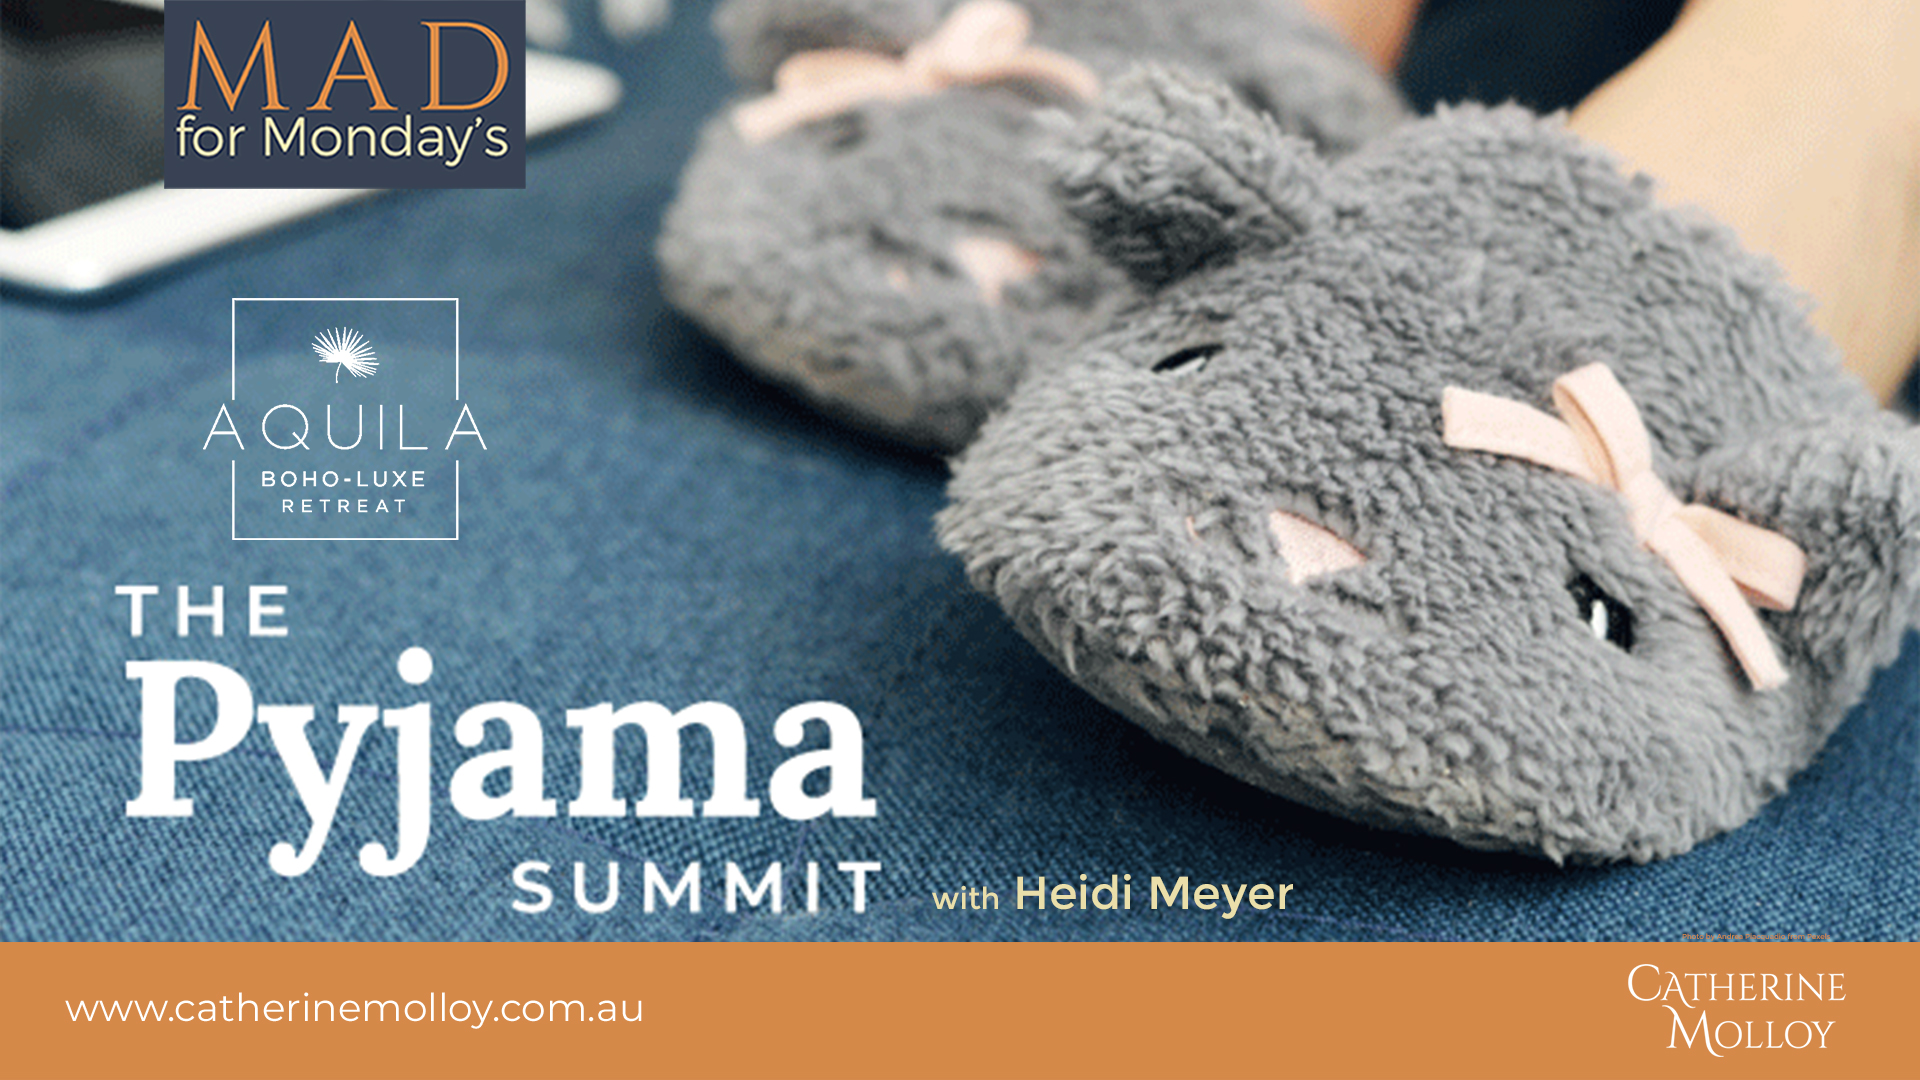 MAD for Monday’s – The Pyjama Summit